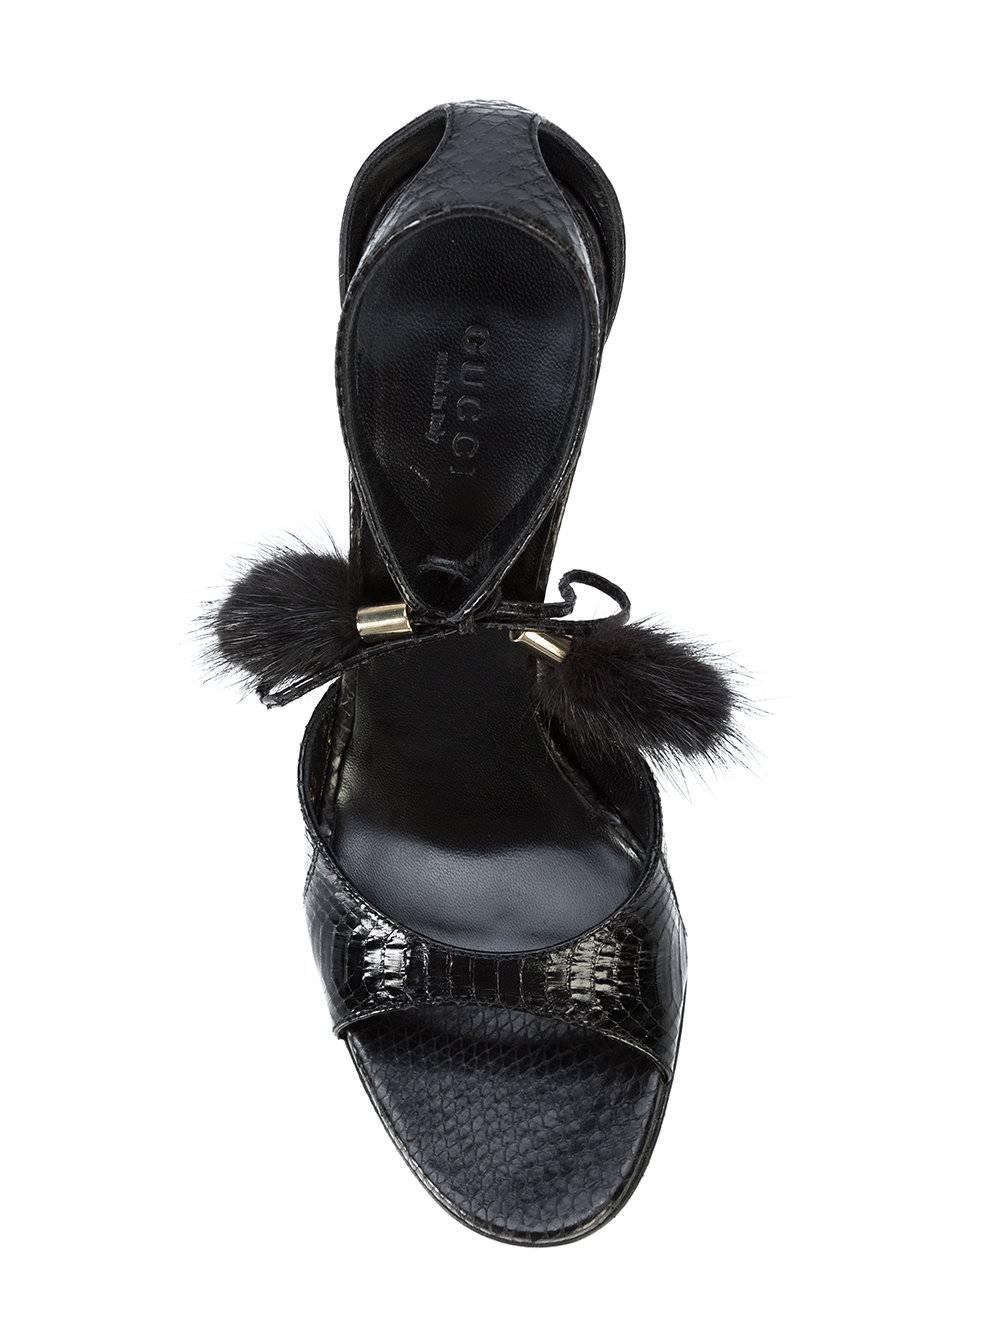 Gucci New Black Embossed Snakeskin Fur Pom Pom Evening Sandals Heels in Box 1